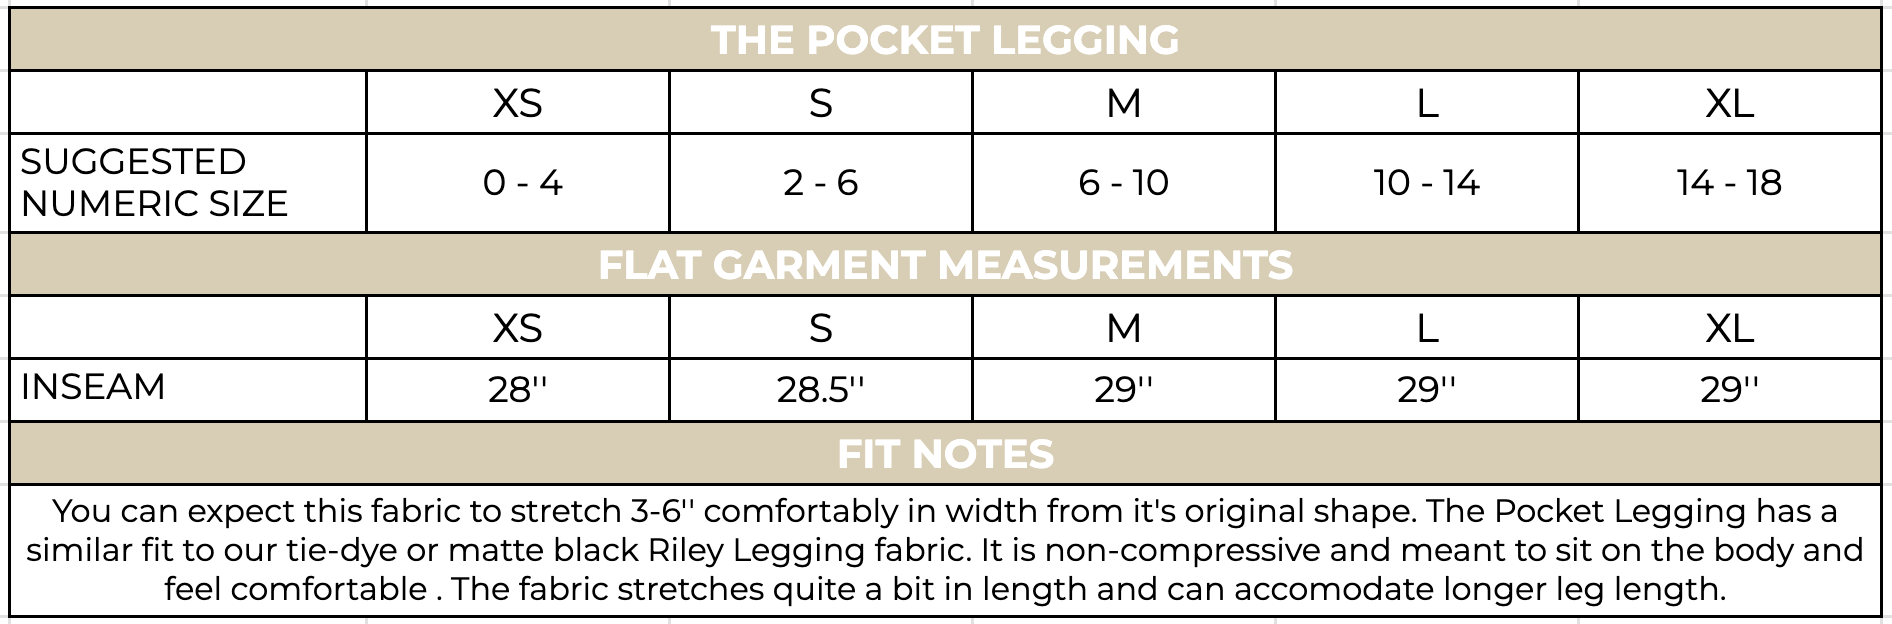 Pocket Legging